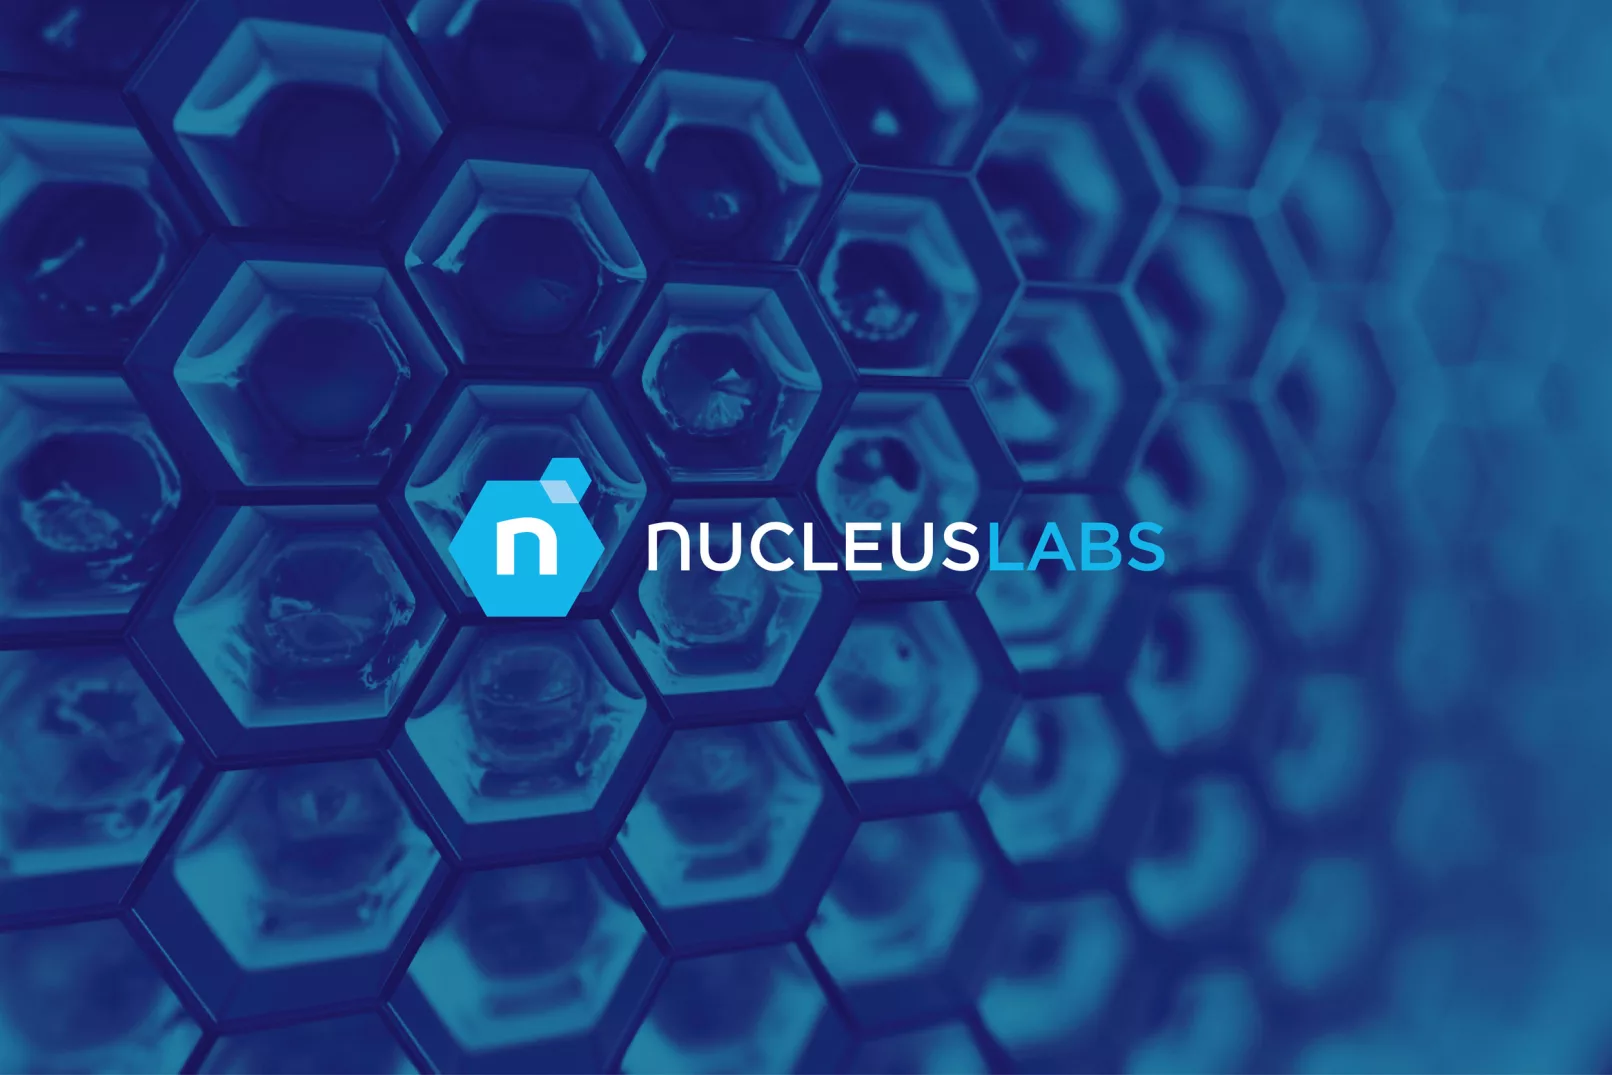 Nucleus Labs